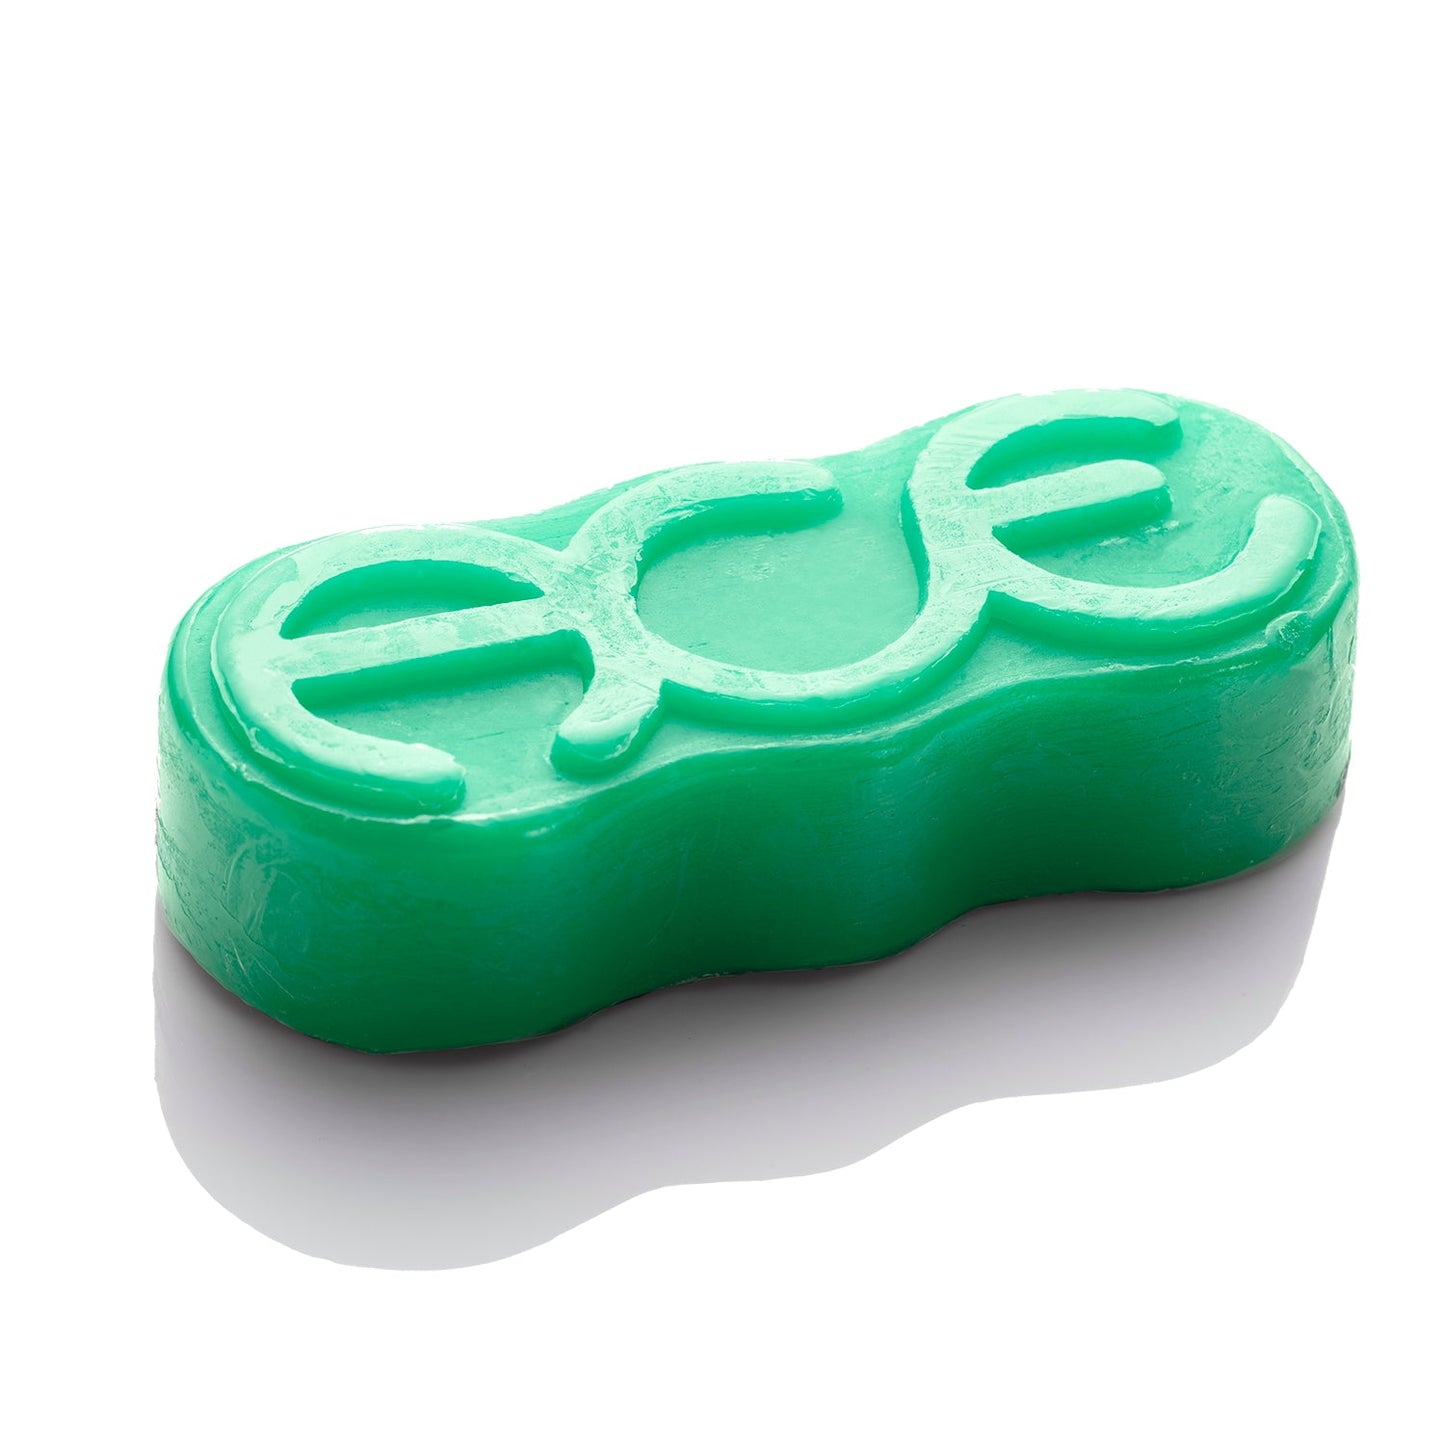 ACE green skate wax - SkatebruhSG